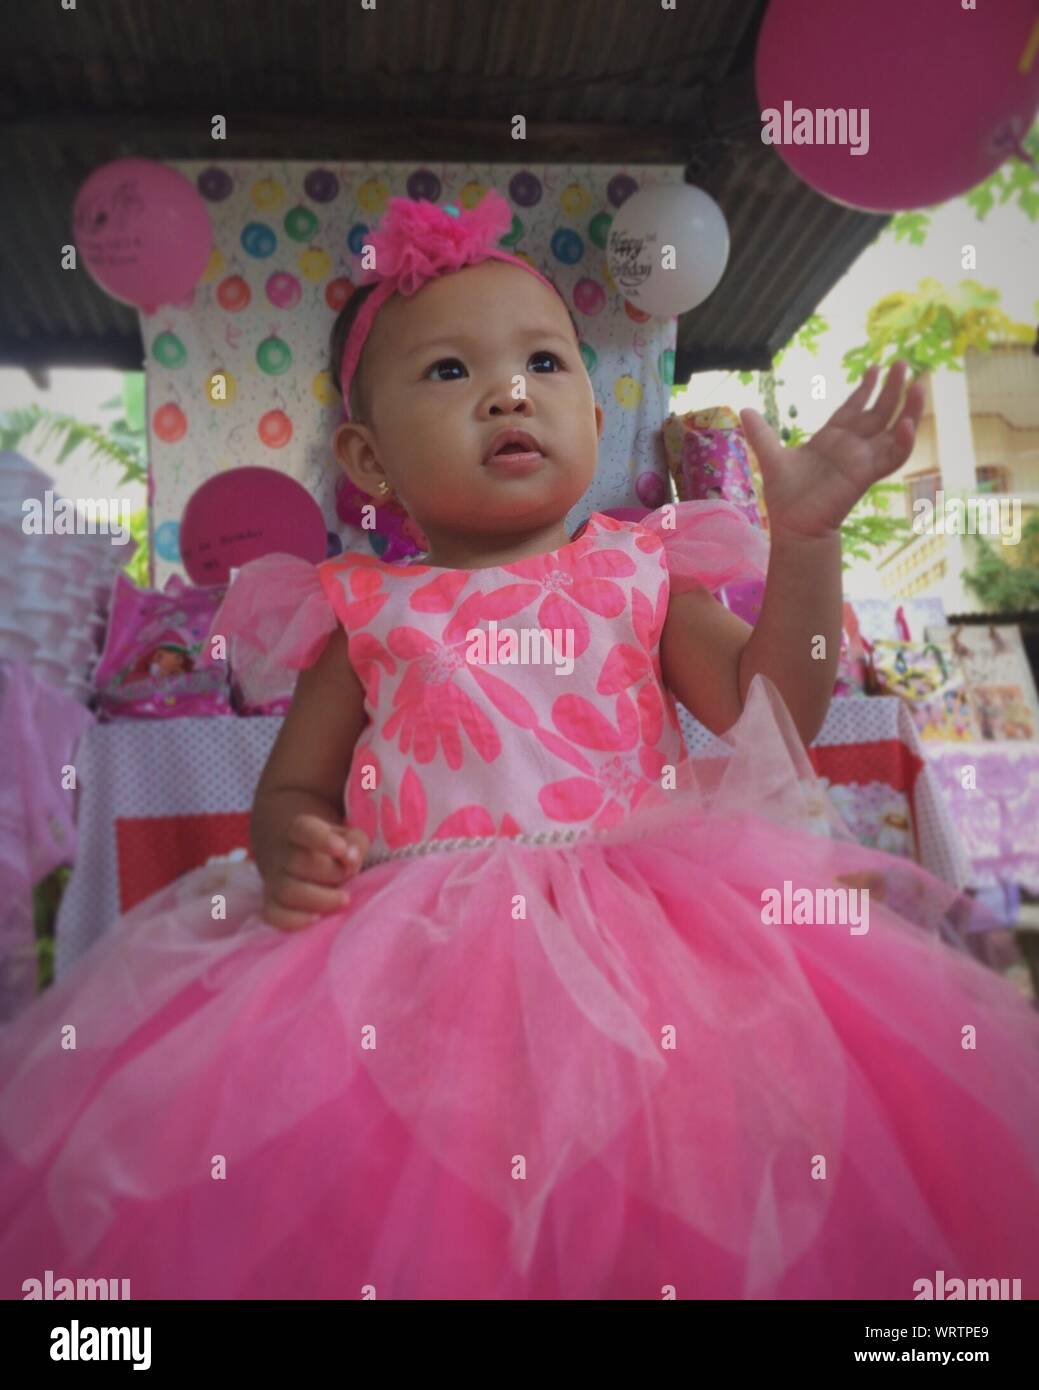 cute baby pink dress